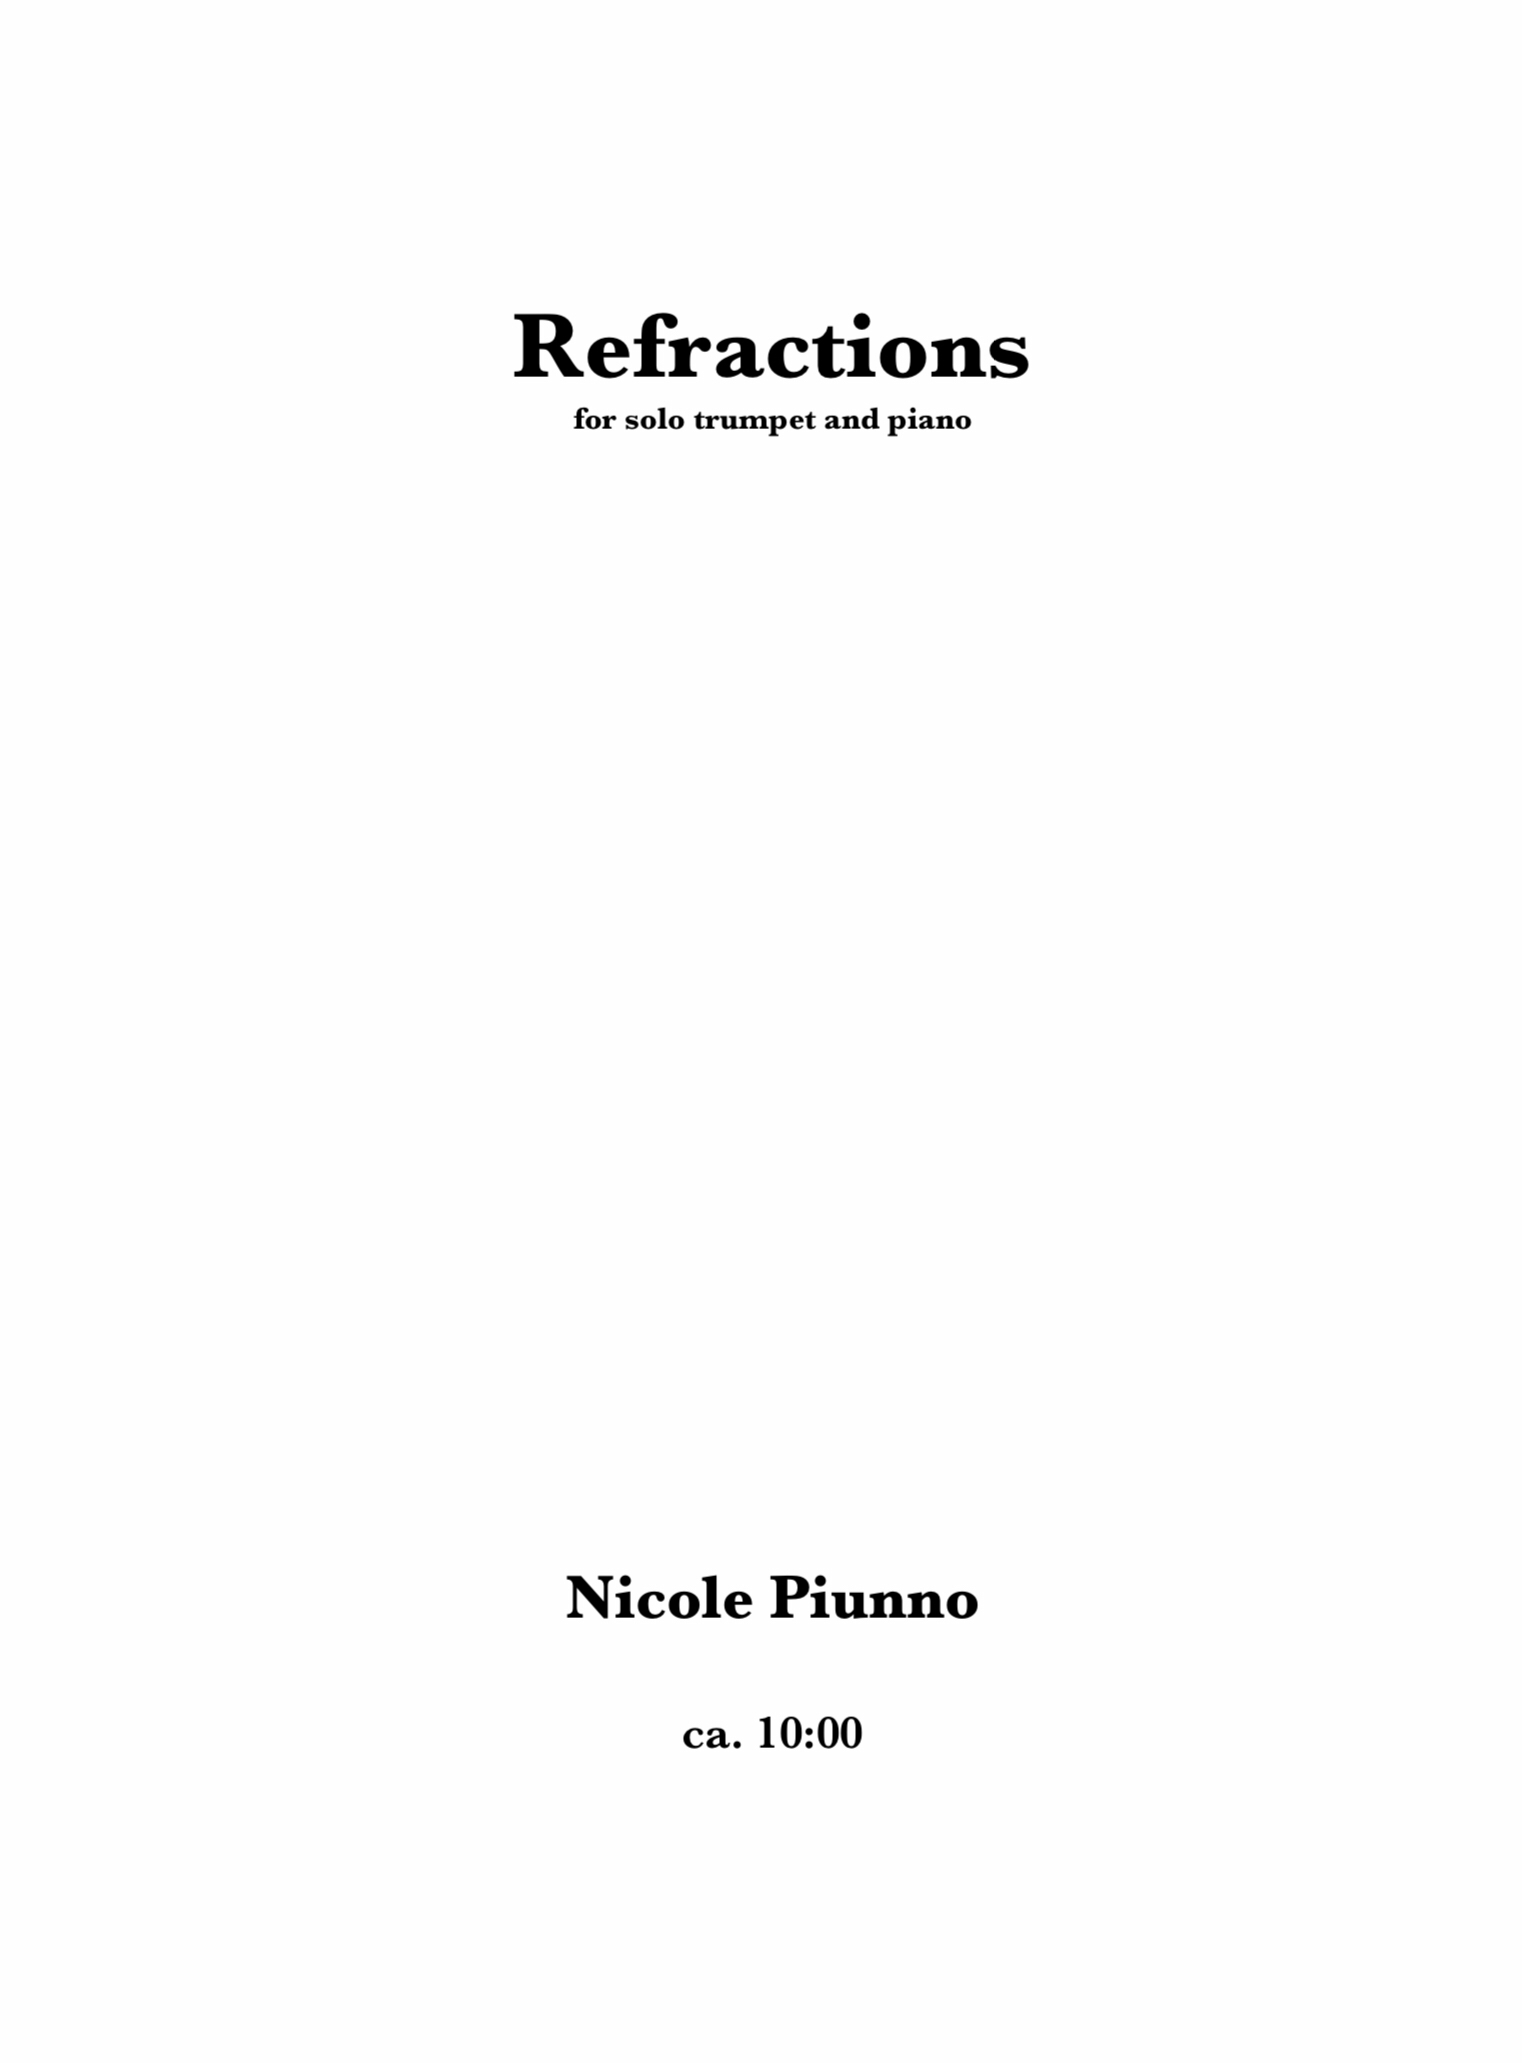 Refractions by Nicole Piunno